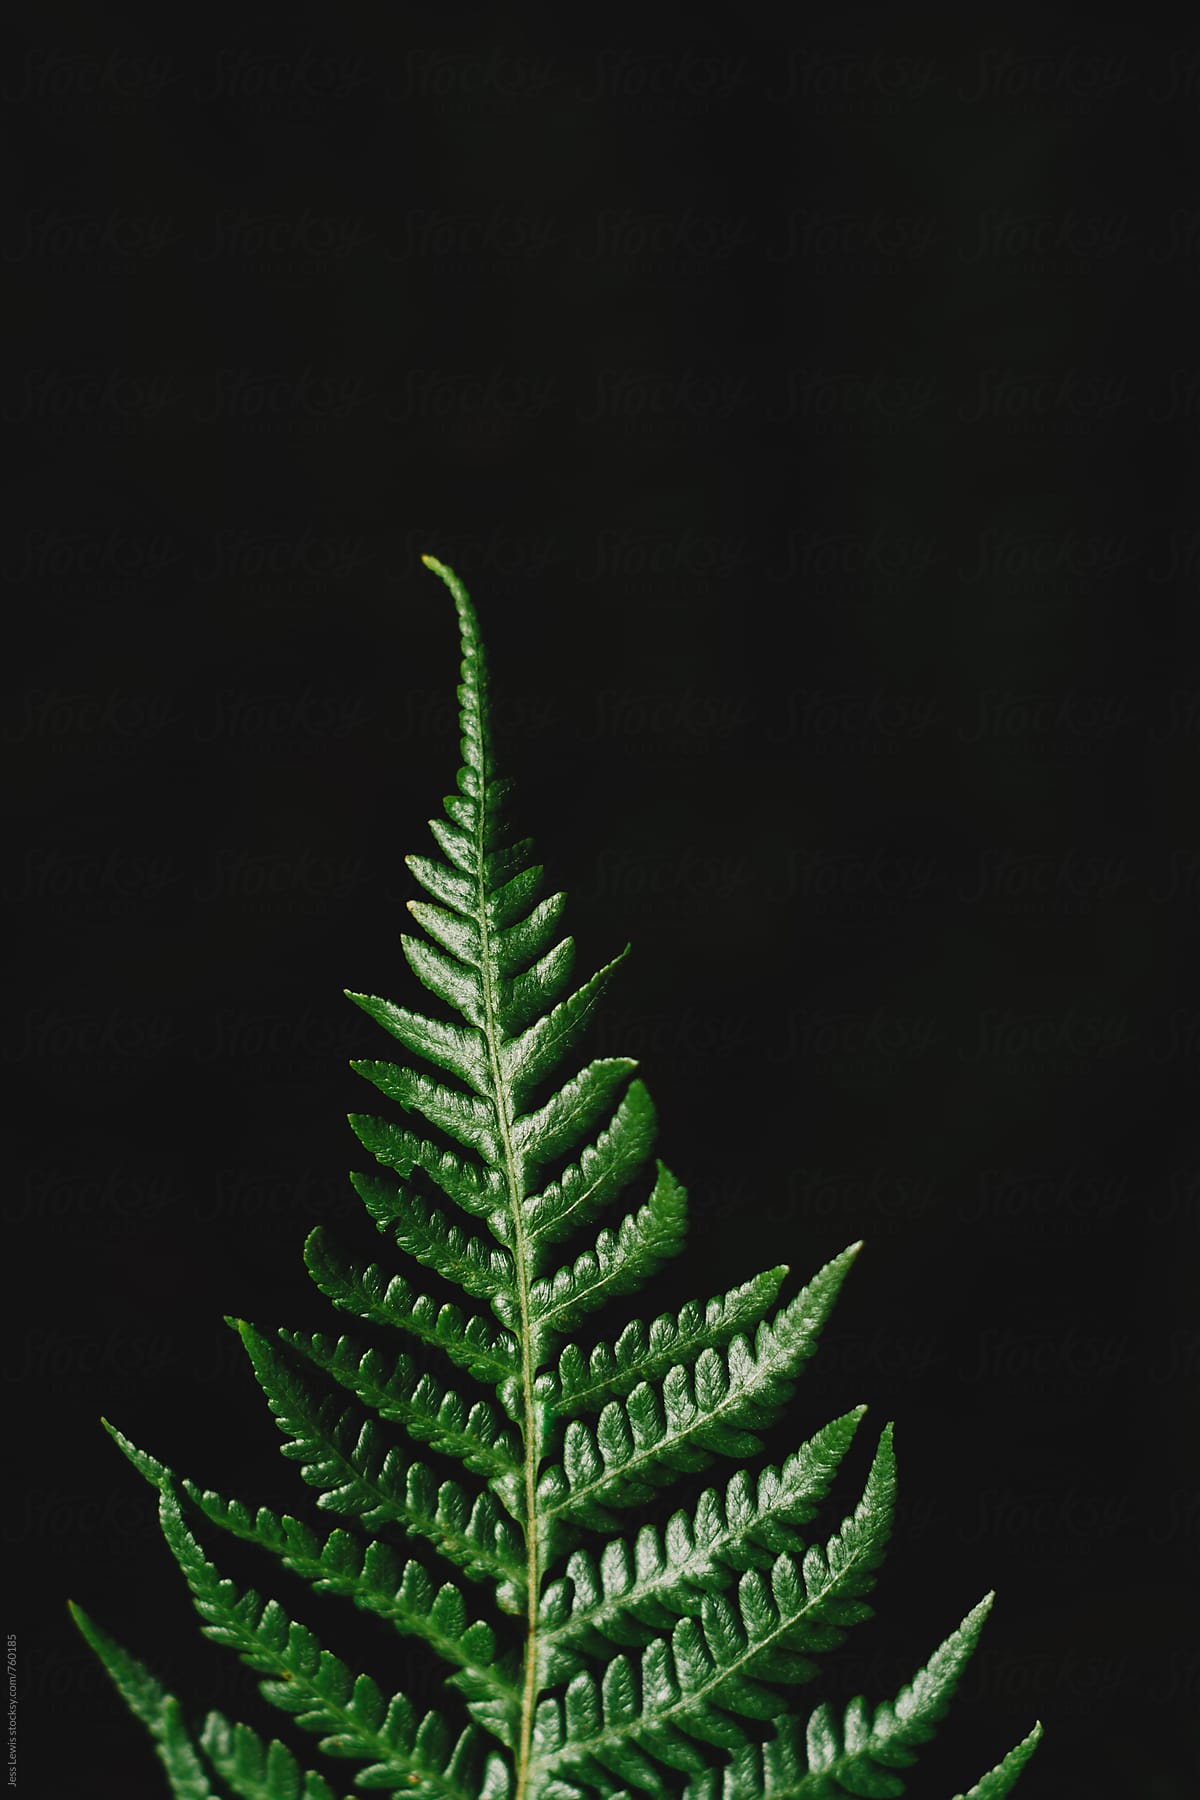 close up of a fern leaf